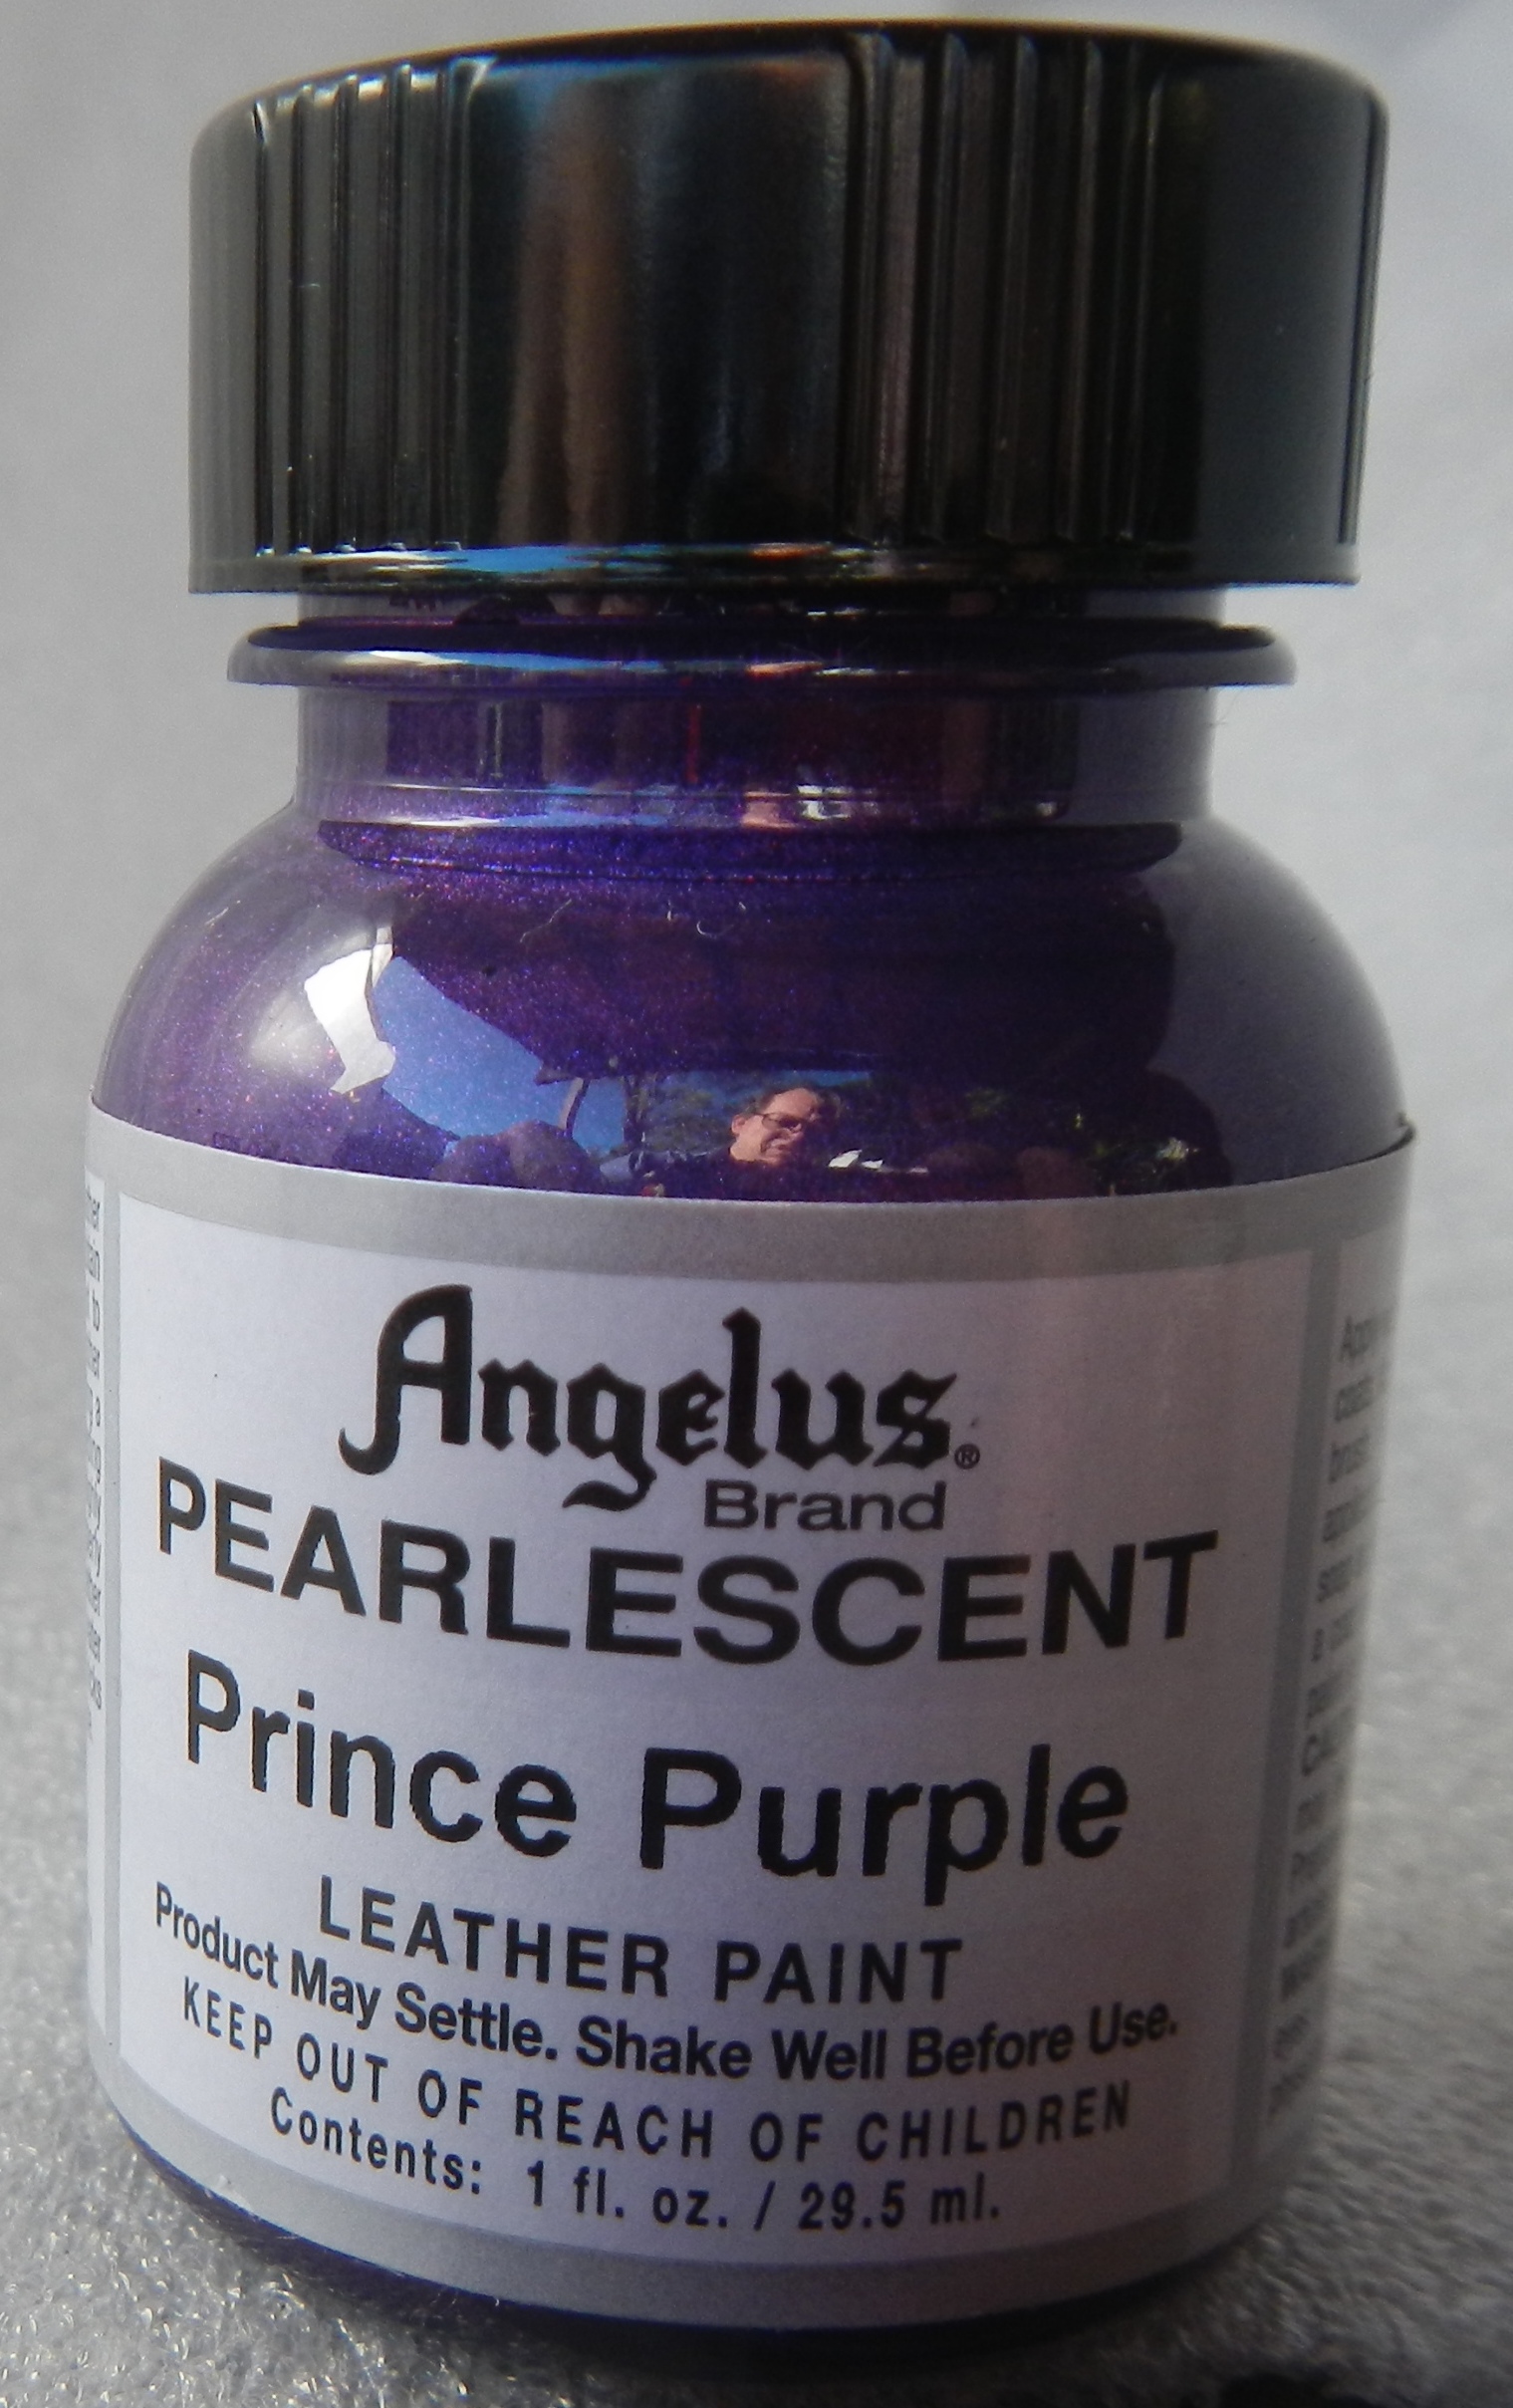 Prince Purple pearlescent paint